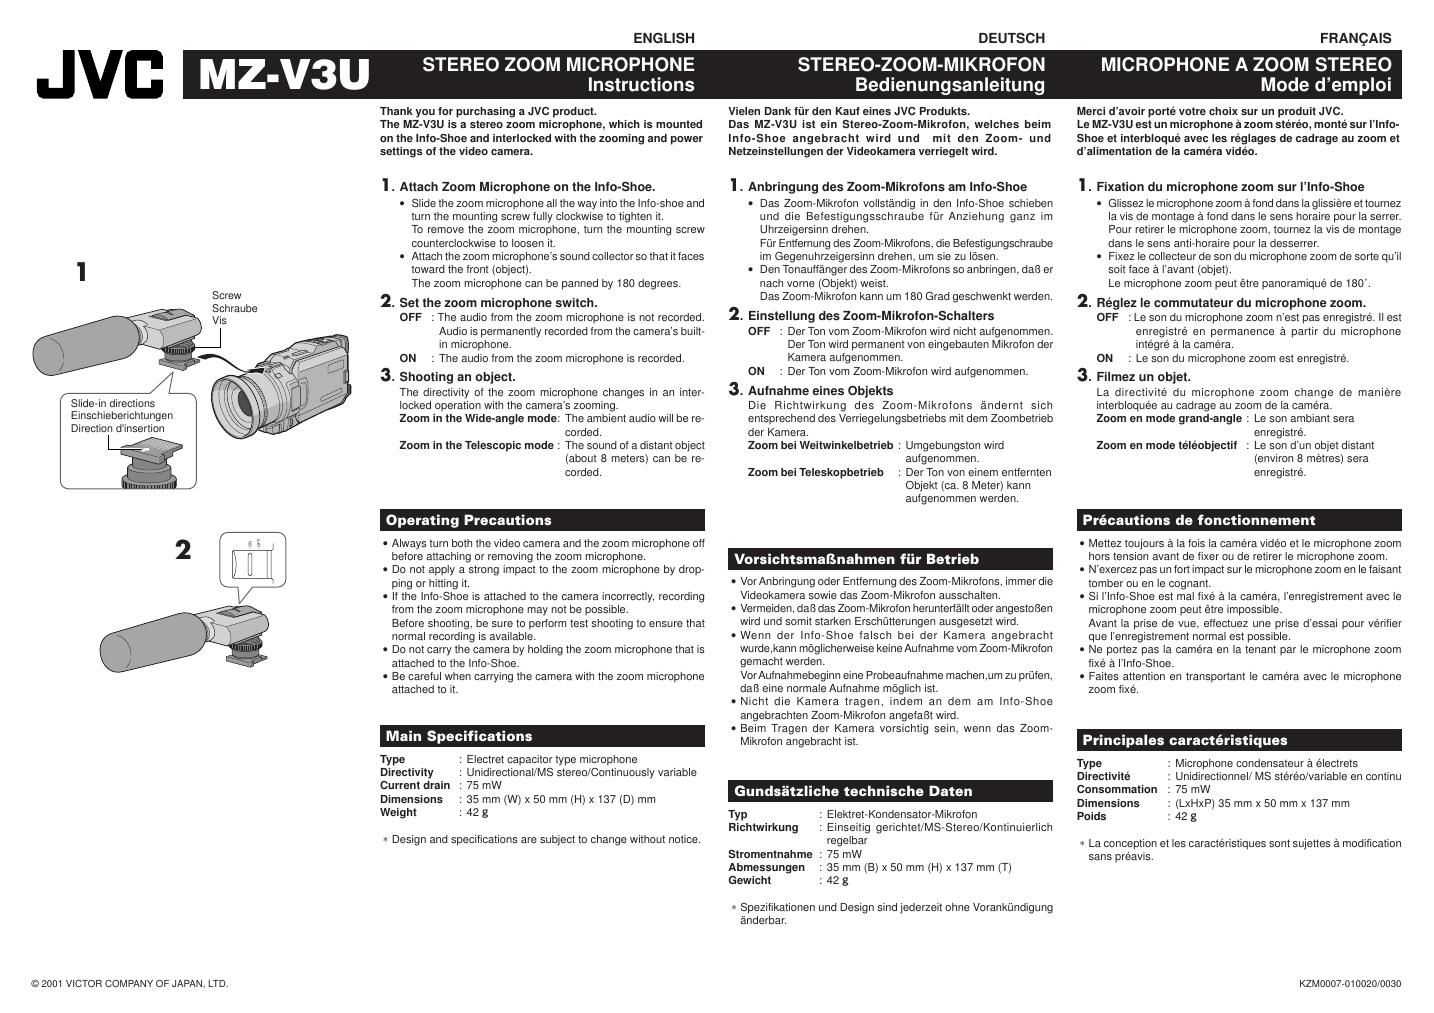 Jvc VLV 3 U Owners Manual